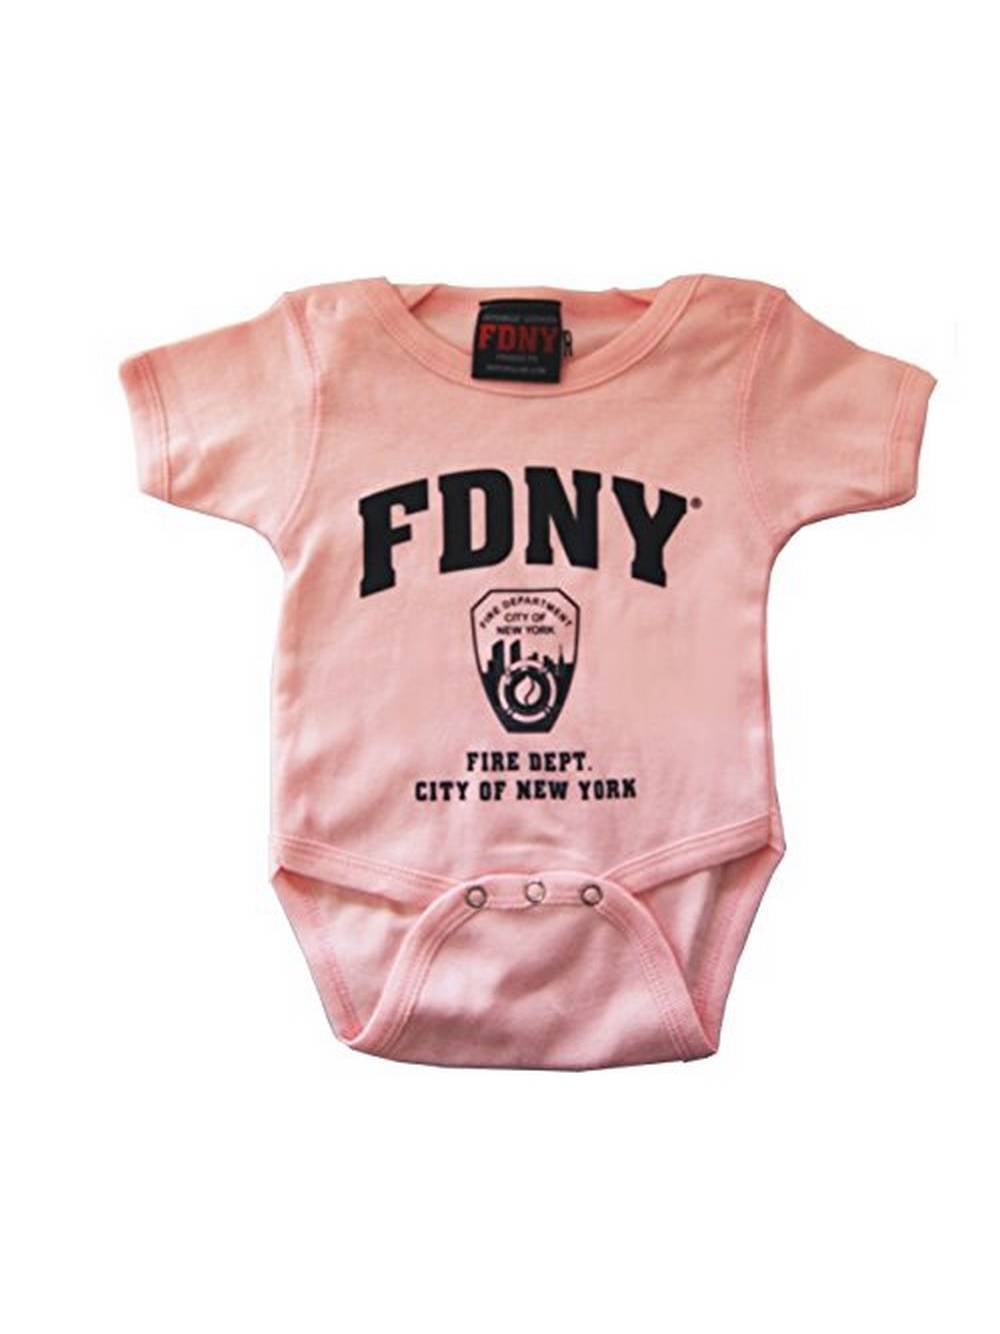 FDNY Baby Infant Screen Printed Bodysuit Navy & White Fire Dept Tee Toddler Gift 